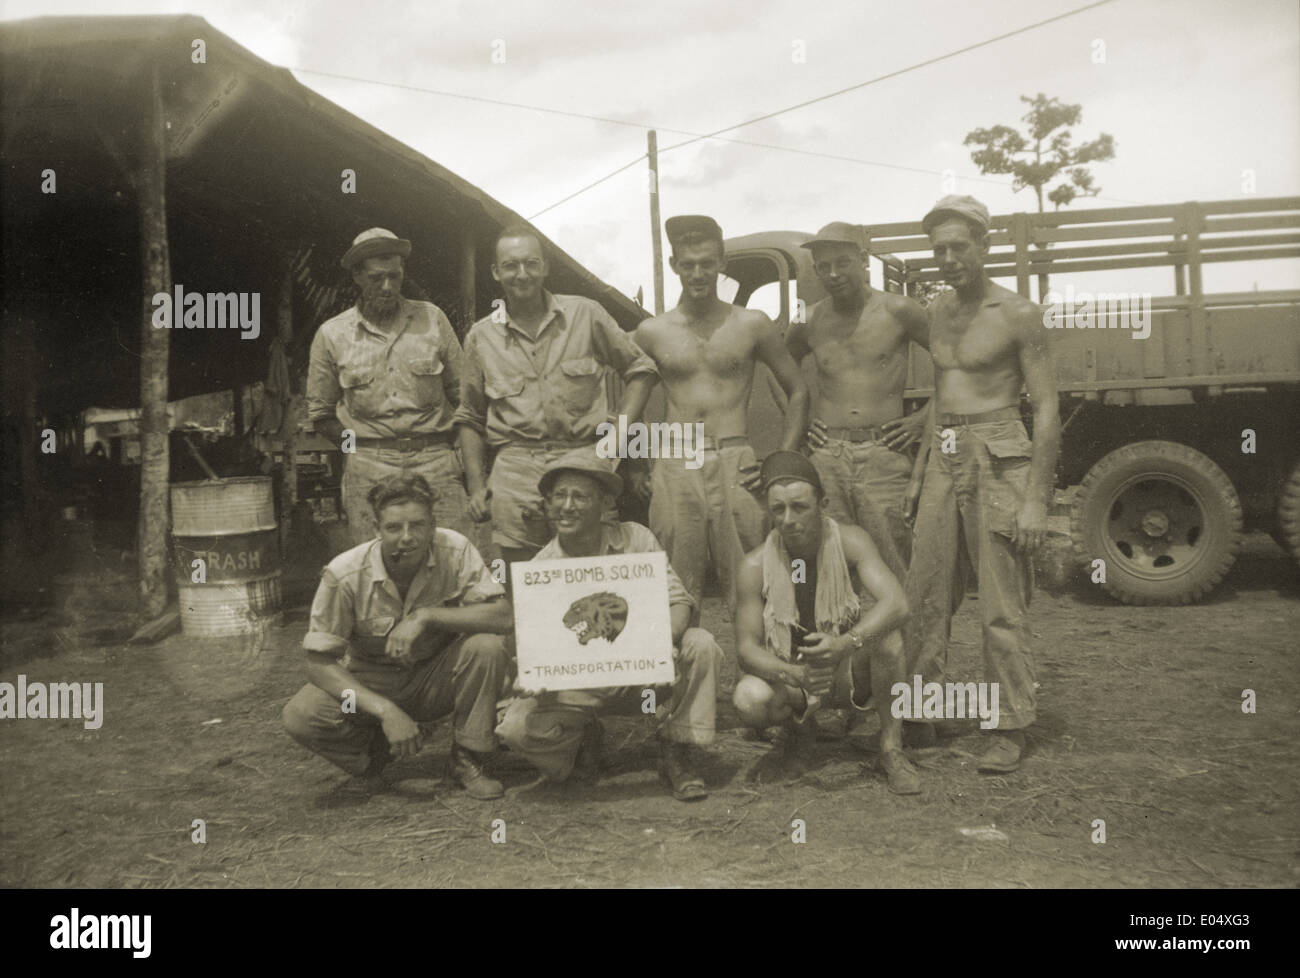 Ca. 1944 Gruppenfoto, Mitglieder der "Flying Tigers" 823. Bombardement Squadron Medium Transport. Stockfoto